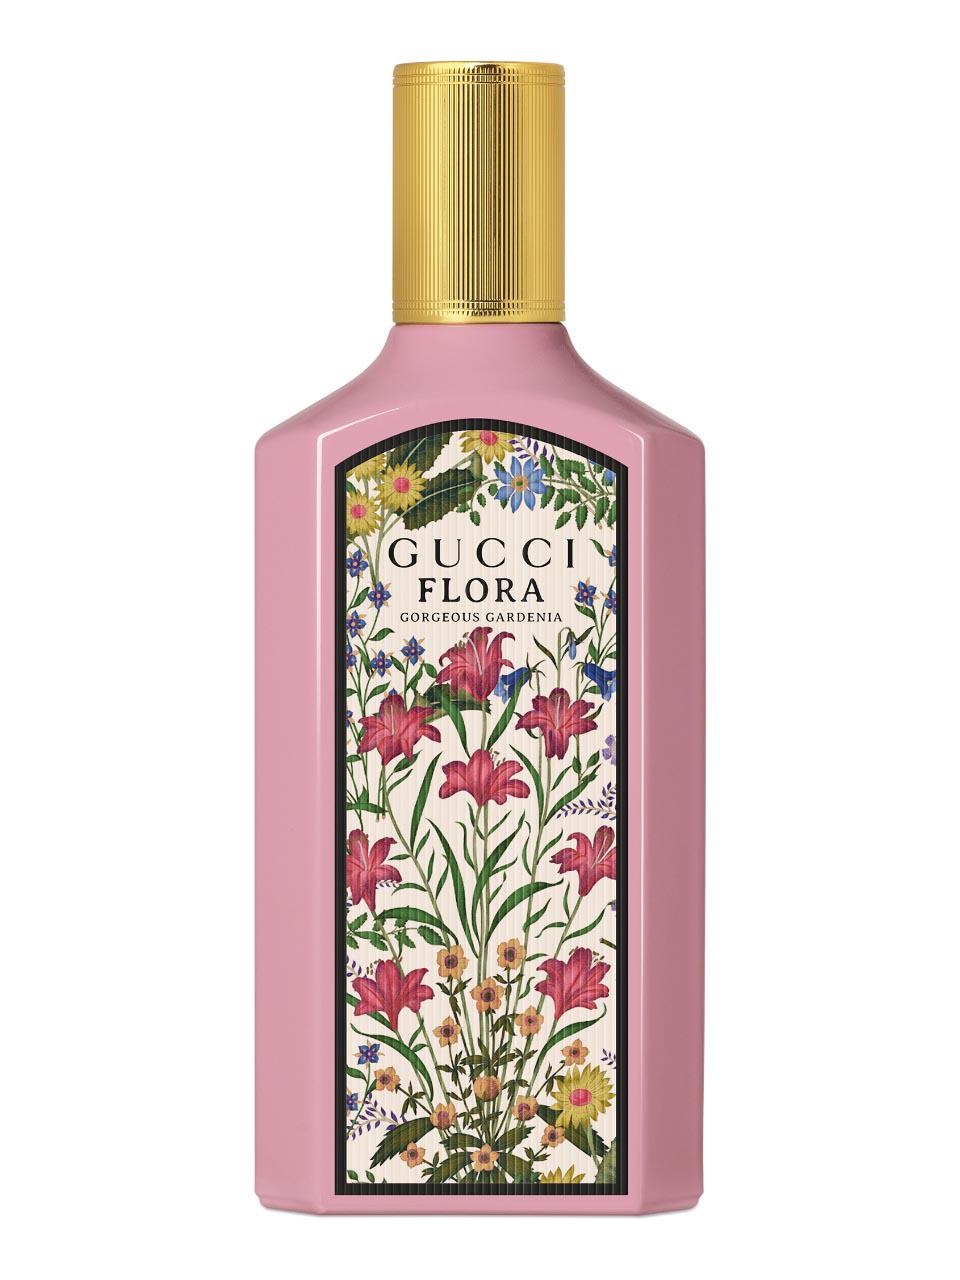 Gucci Flora Gorgeous Gardenia 浓香水100 ml | 法兰克福机场网上购物